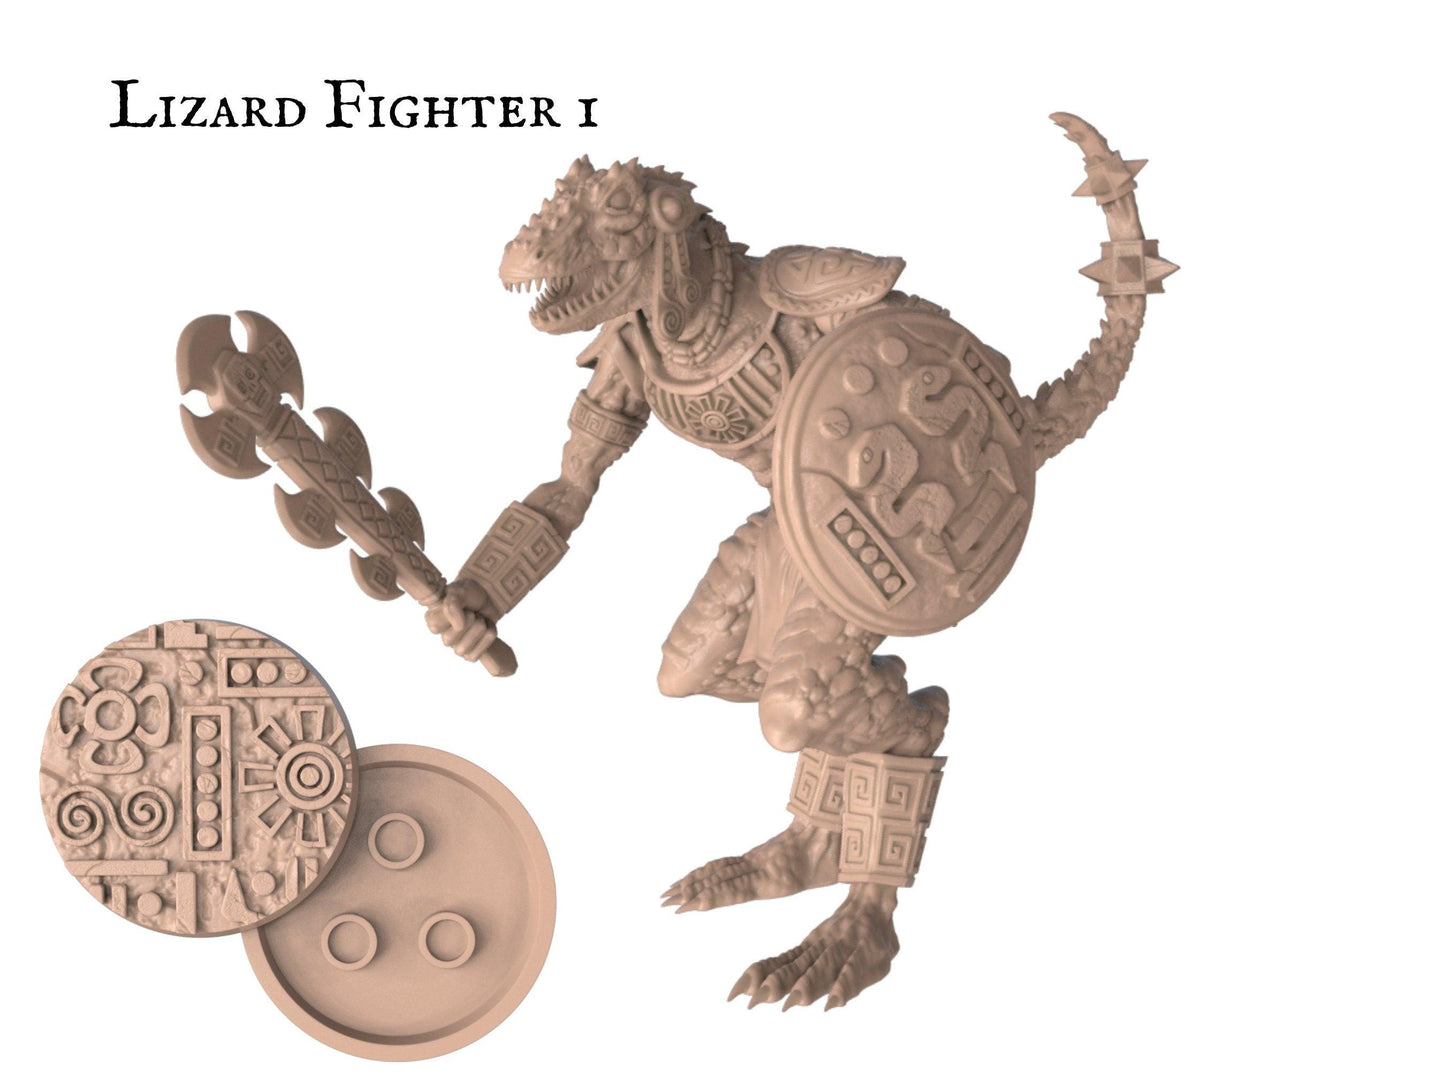 DnD Lizard Fighter Miniature- 40mm base | 32mm scale | Tabletop gaming DnD Miniature Dungeons and Dragons, dnd lizard warrior - Plague Miniatures shop for DnD Miniatures